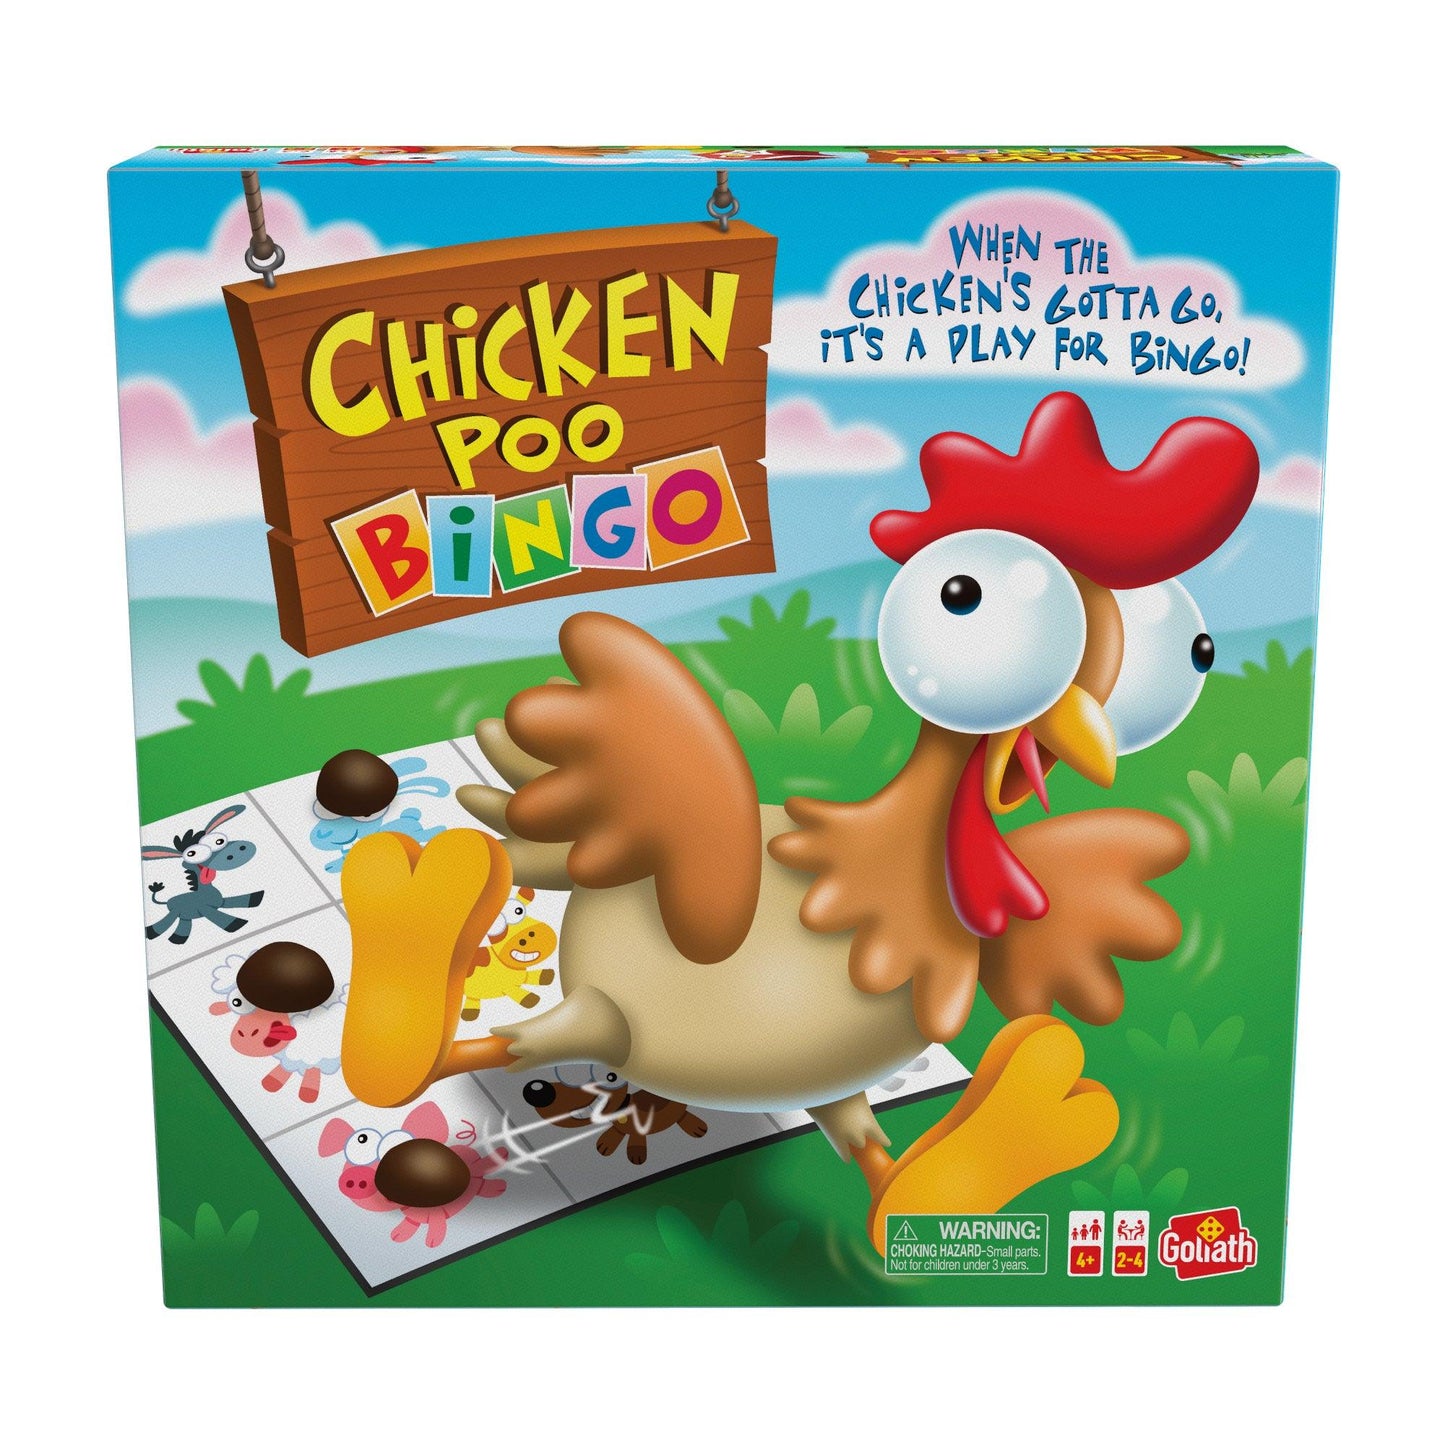 Chicken Poo Bingo - Loomini